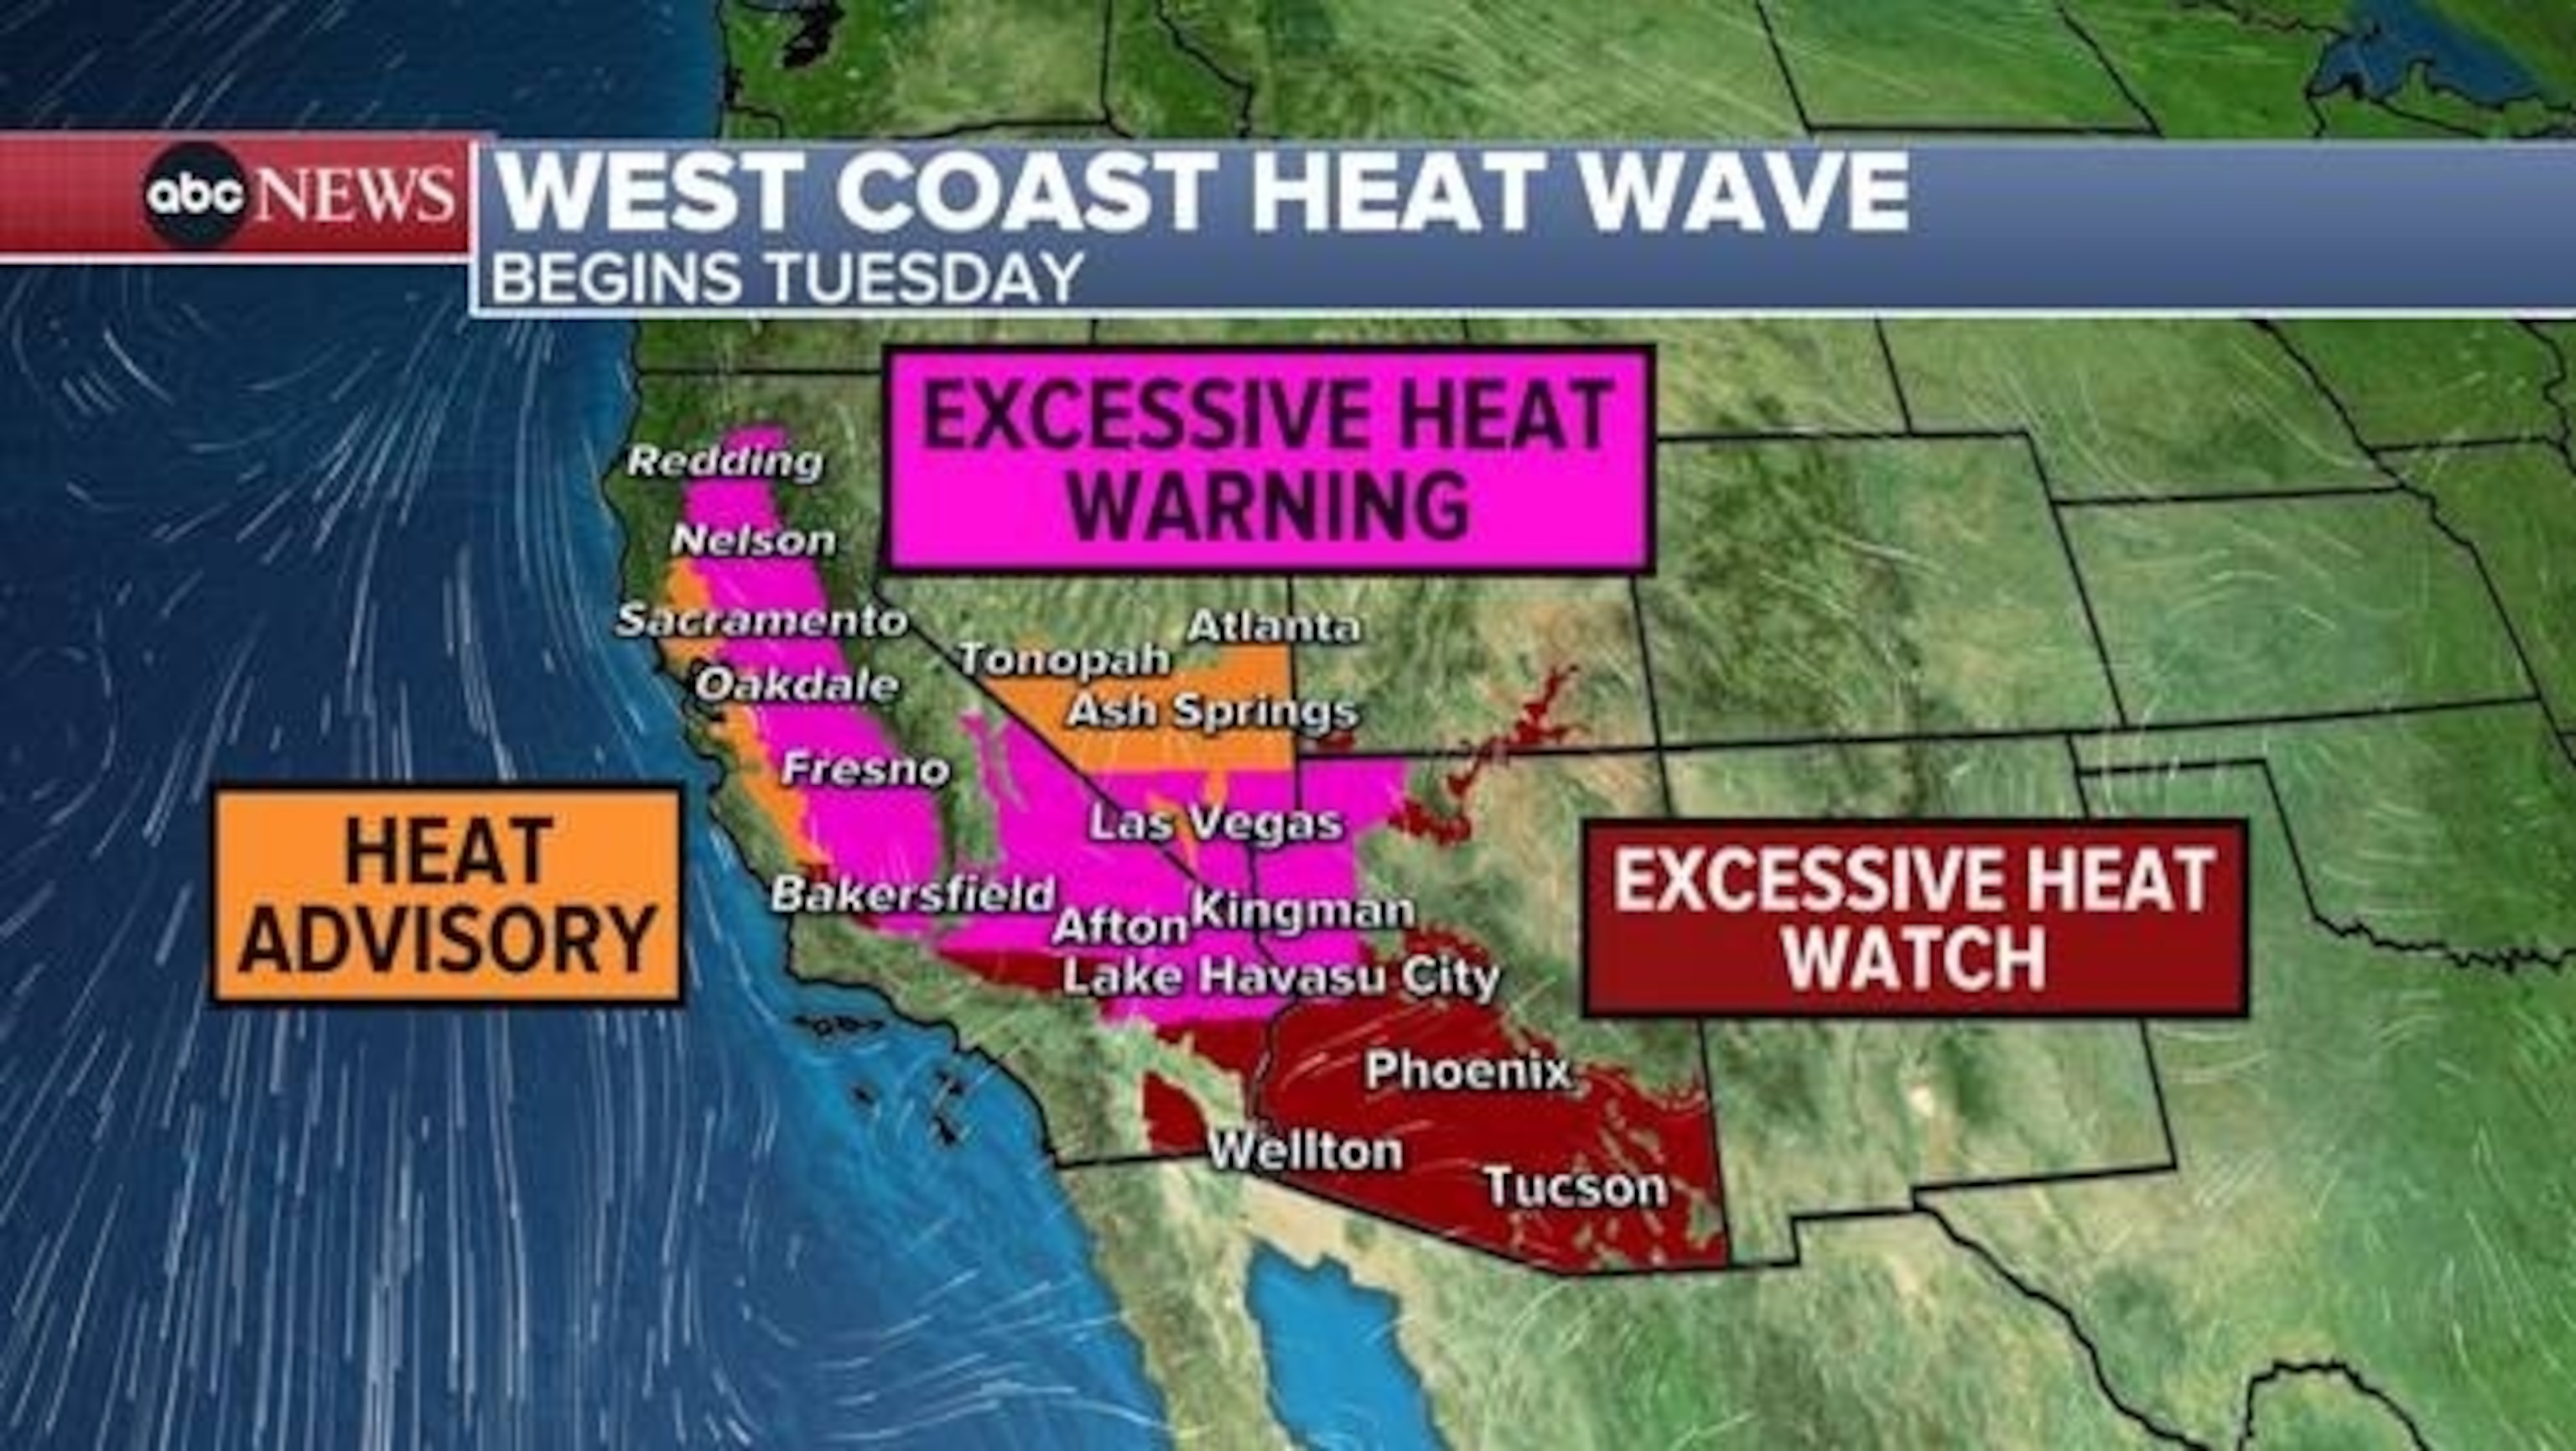 PHOTO: West coast heat wave begins Tuesday.